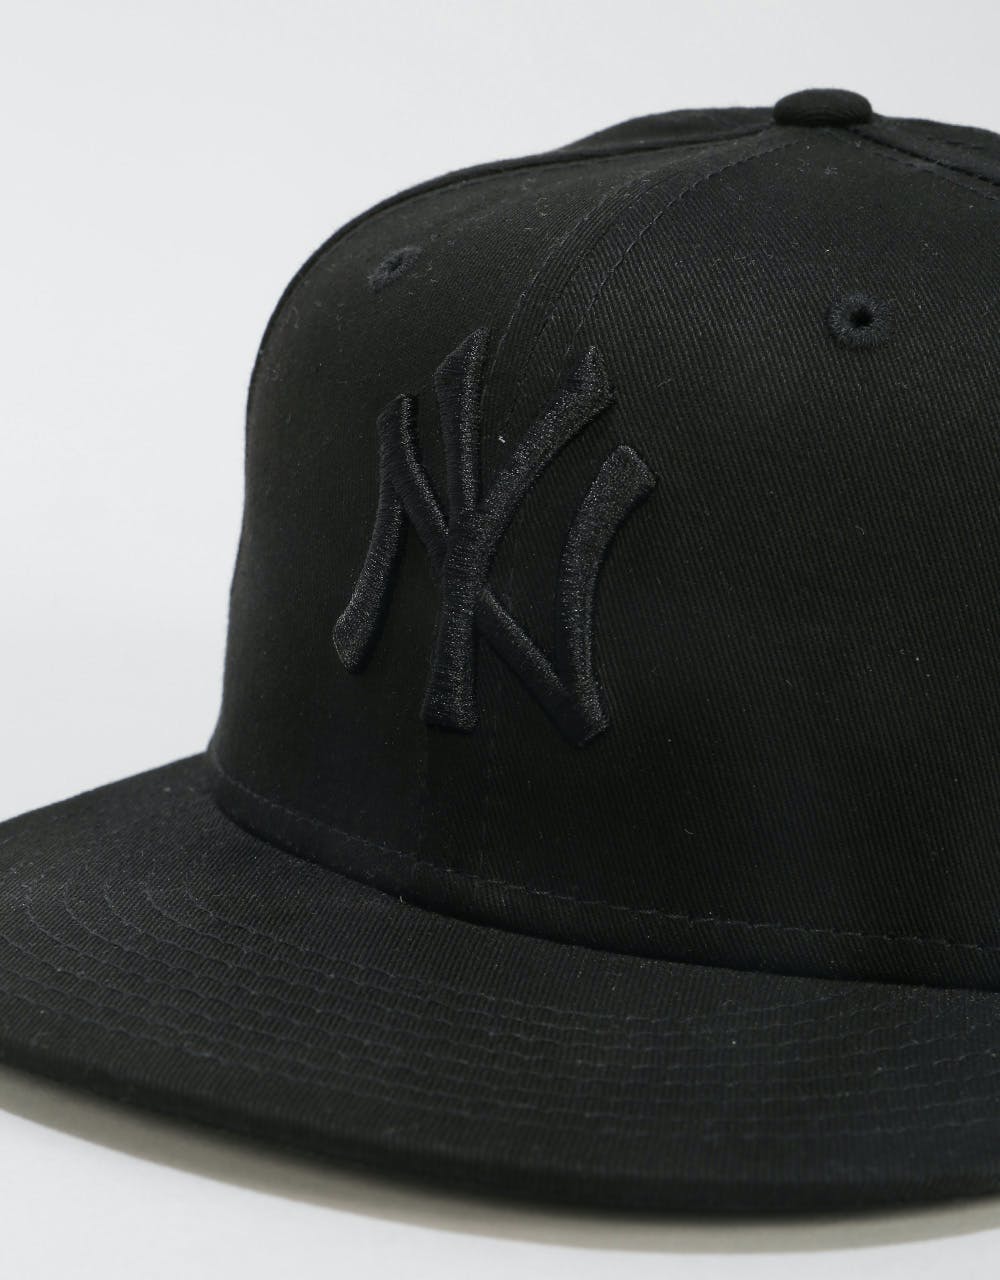 New Era 9Fifty MLB New York Yankees Snapback Cap - Black/Black